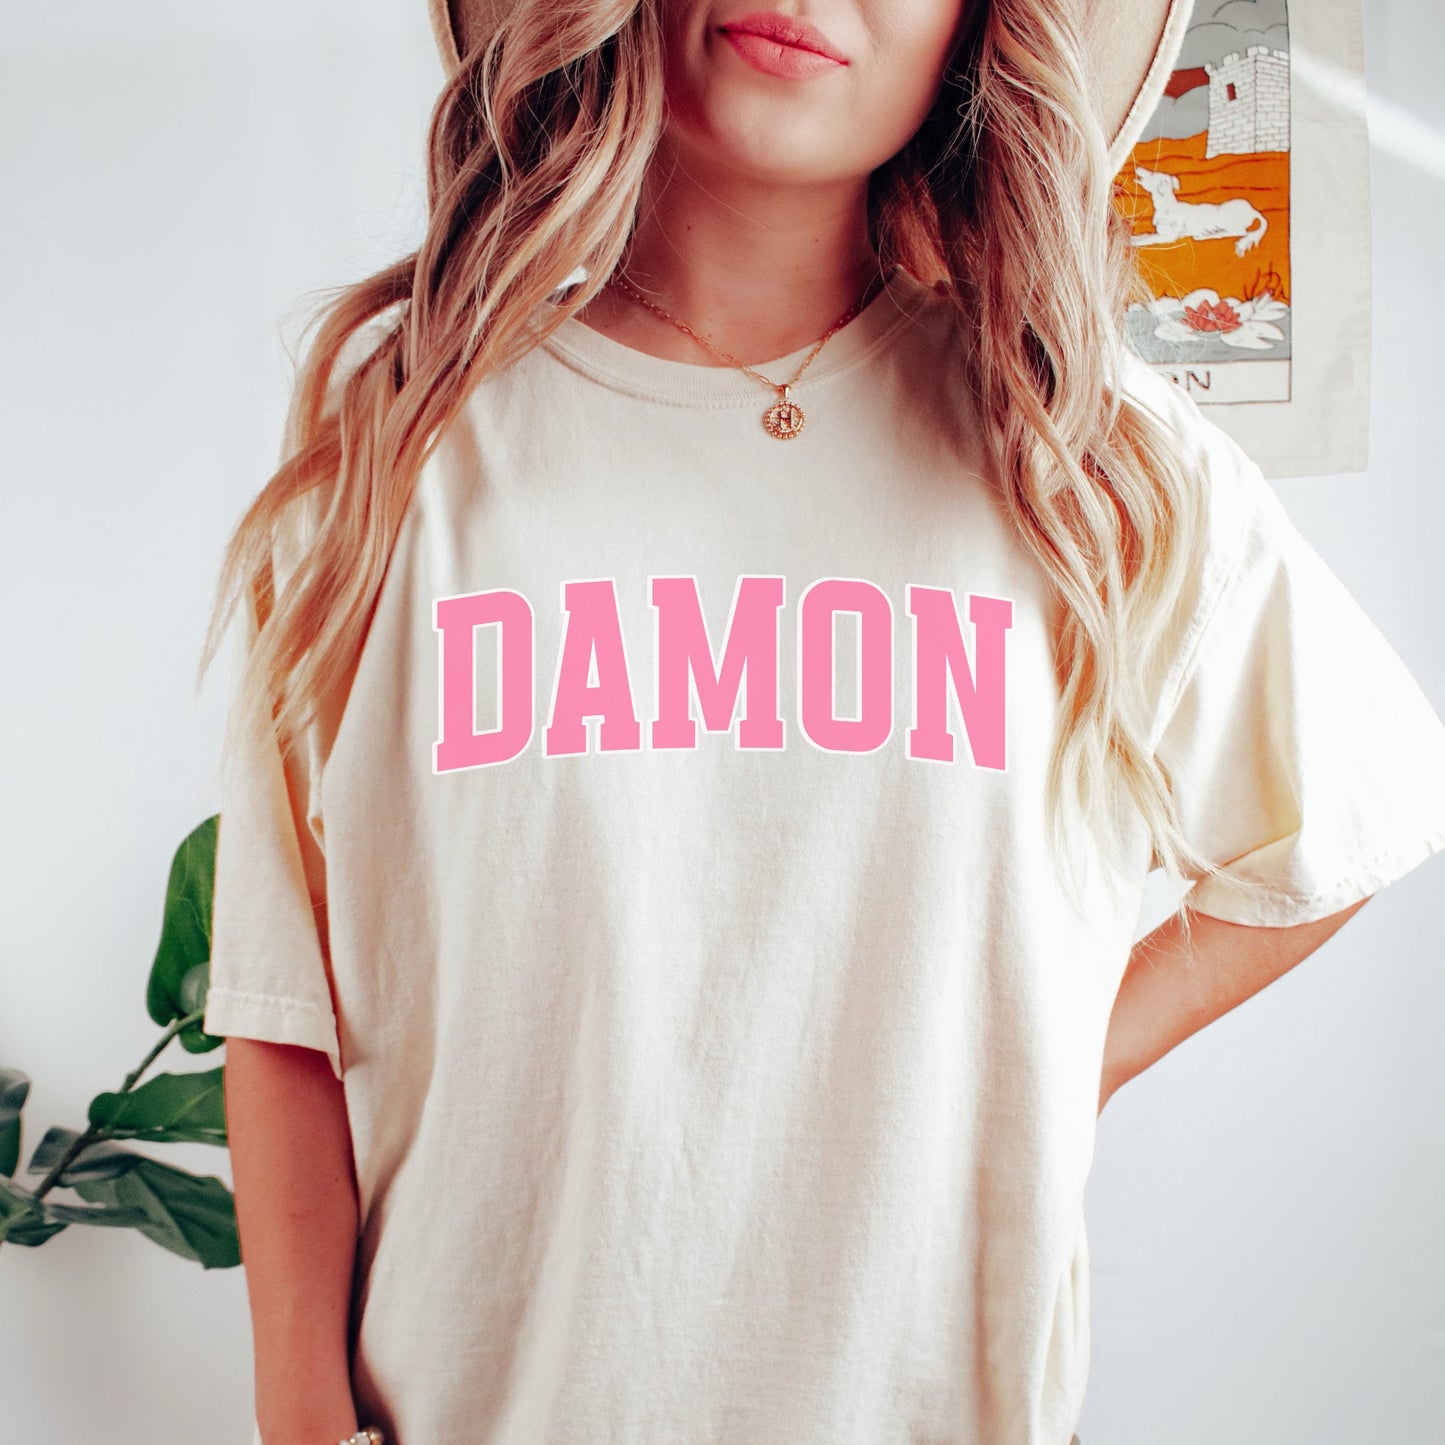 Damon Salvatore Shirt, TVD shirt, Damon Merch, The Vampire Diaries TVD merch, Tvd gift, Damon Salvatore, Stefan Salvatore